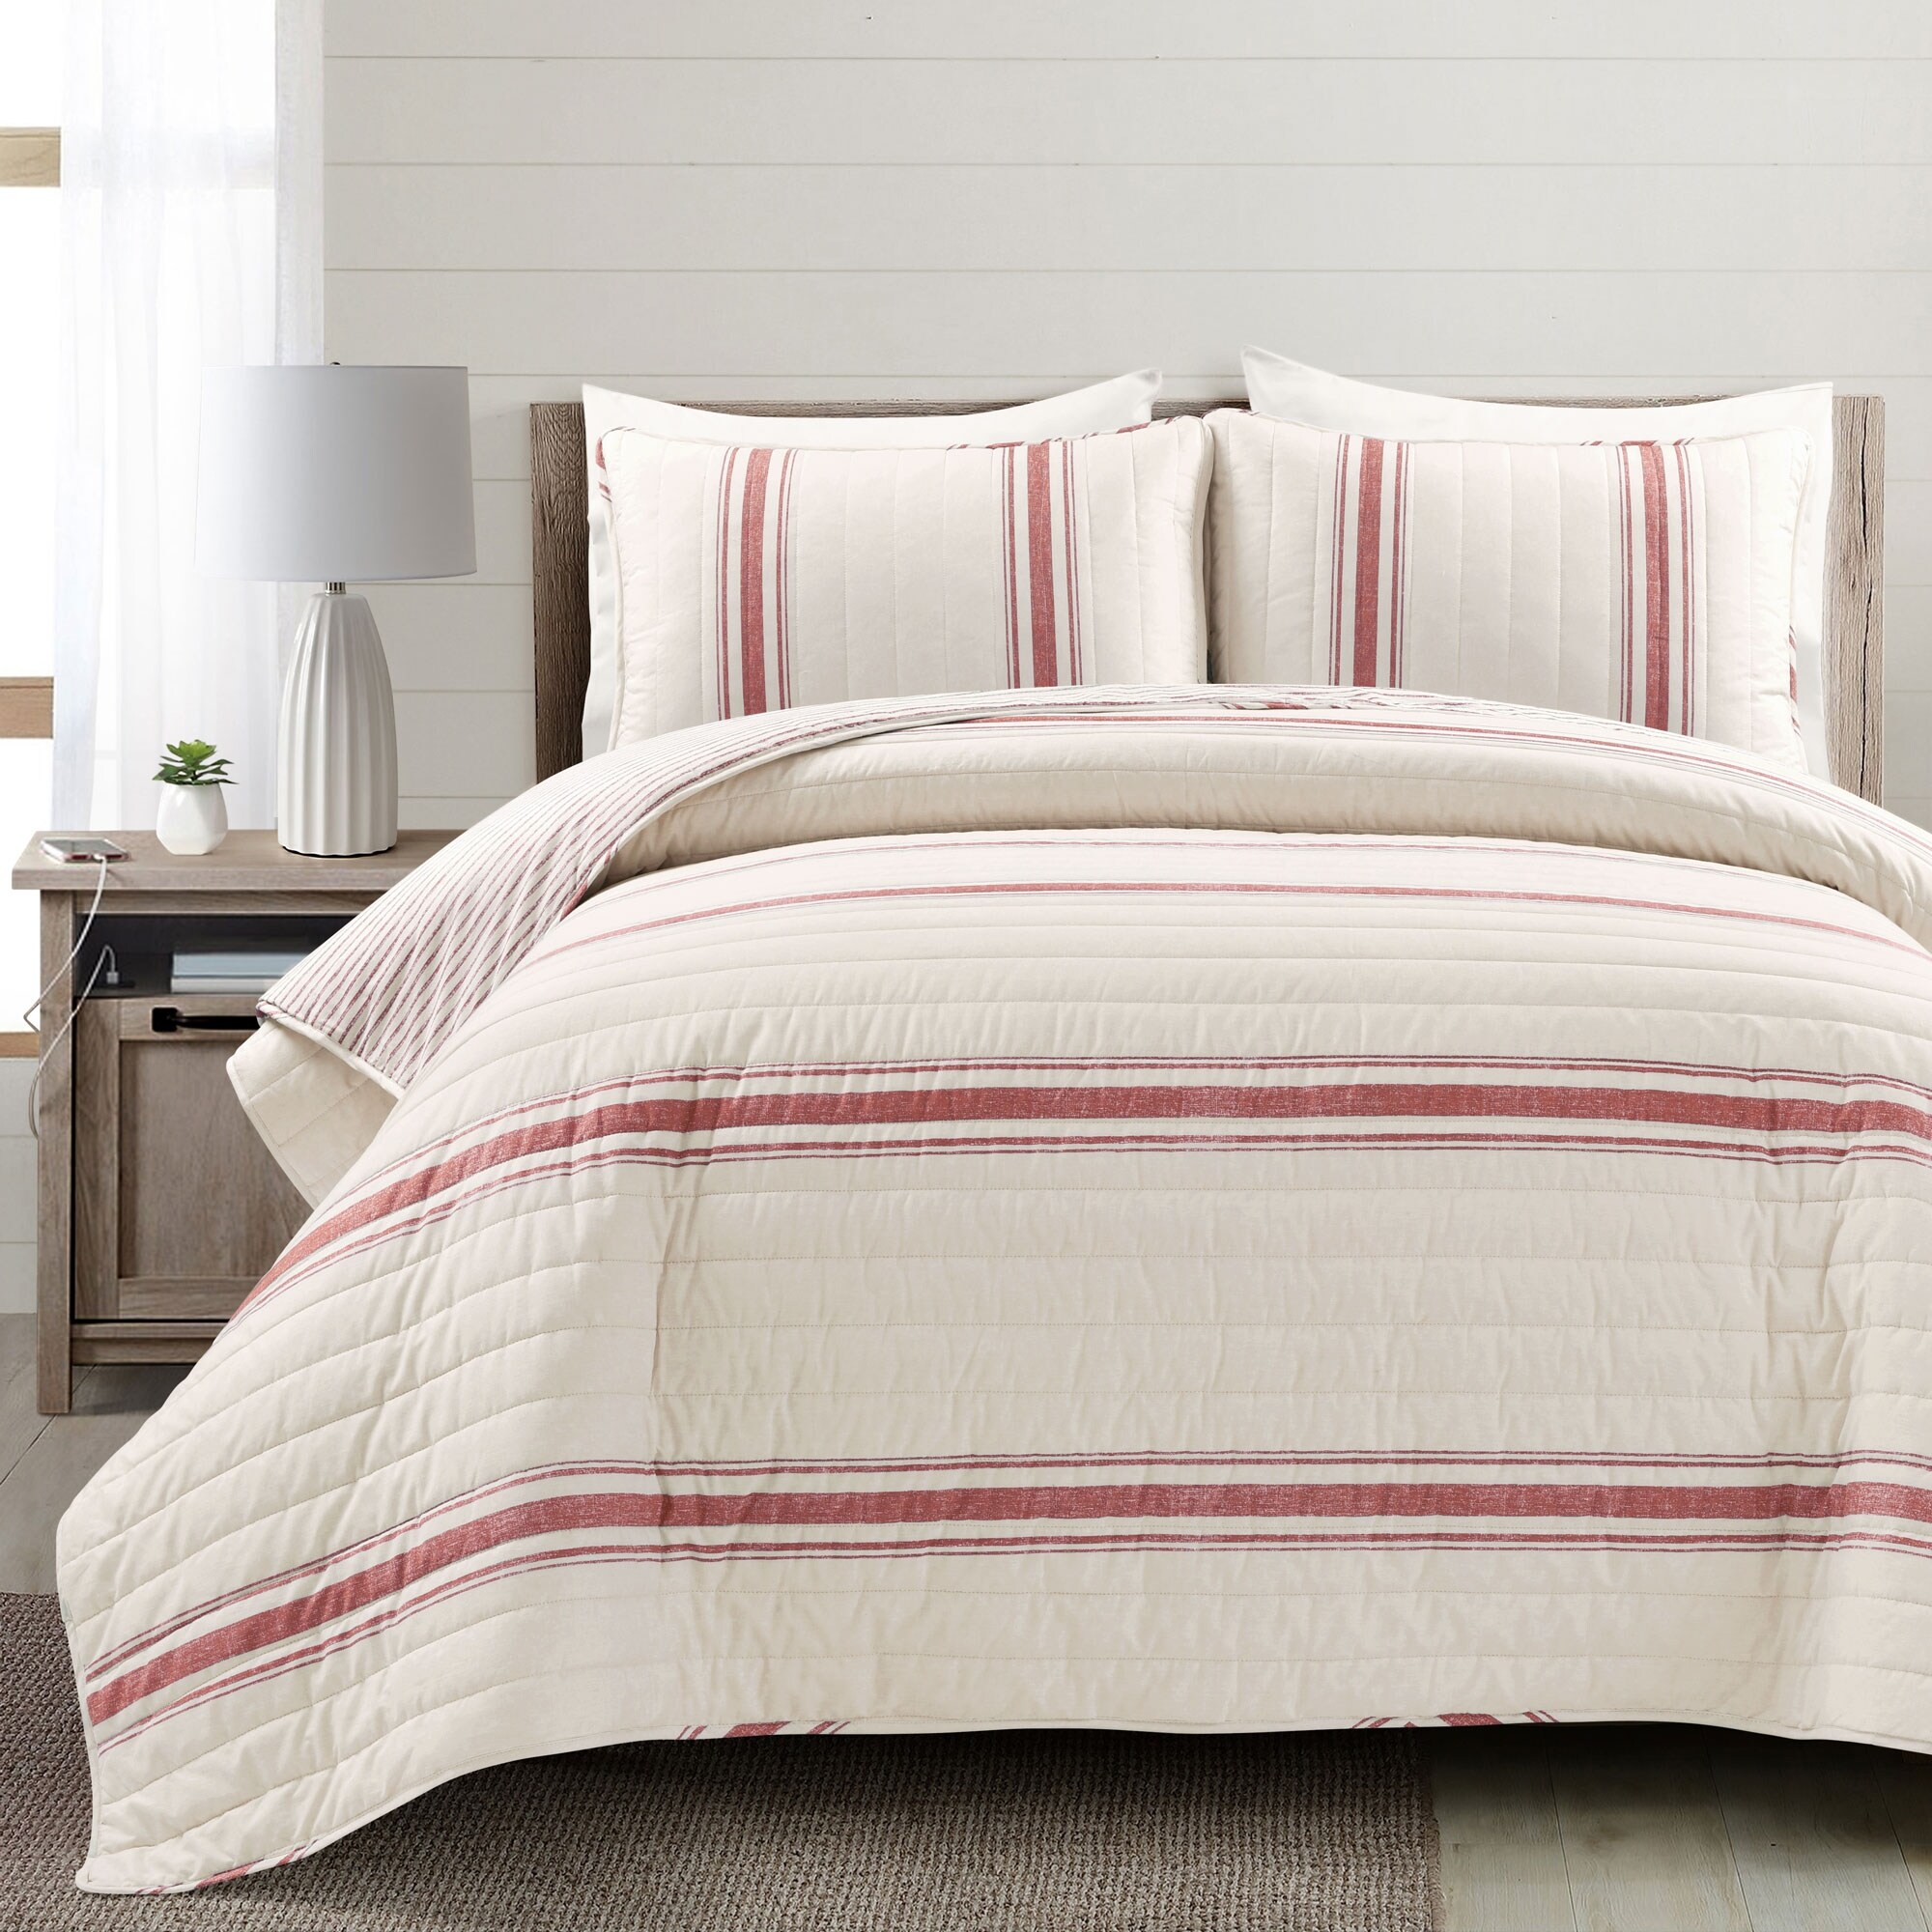 Lush Decor Comforter Farmhouse Stripe 3 Piece Reversible Bedding Set Full Queen Red